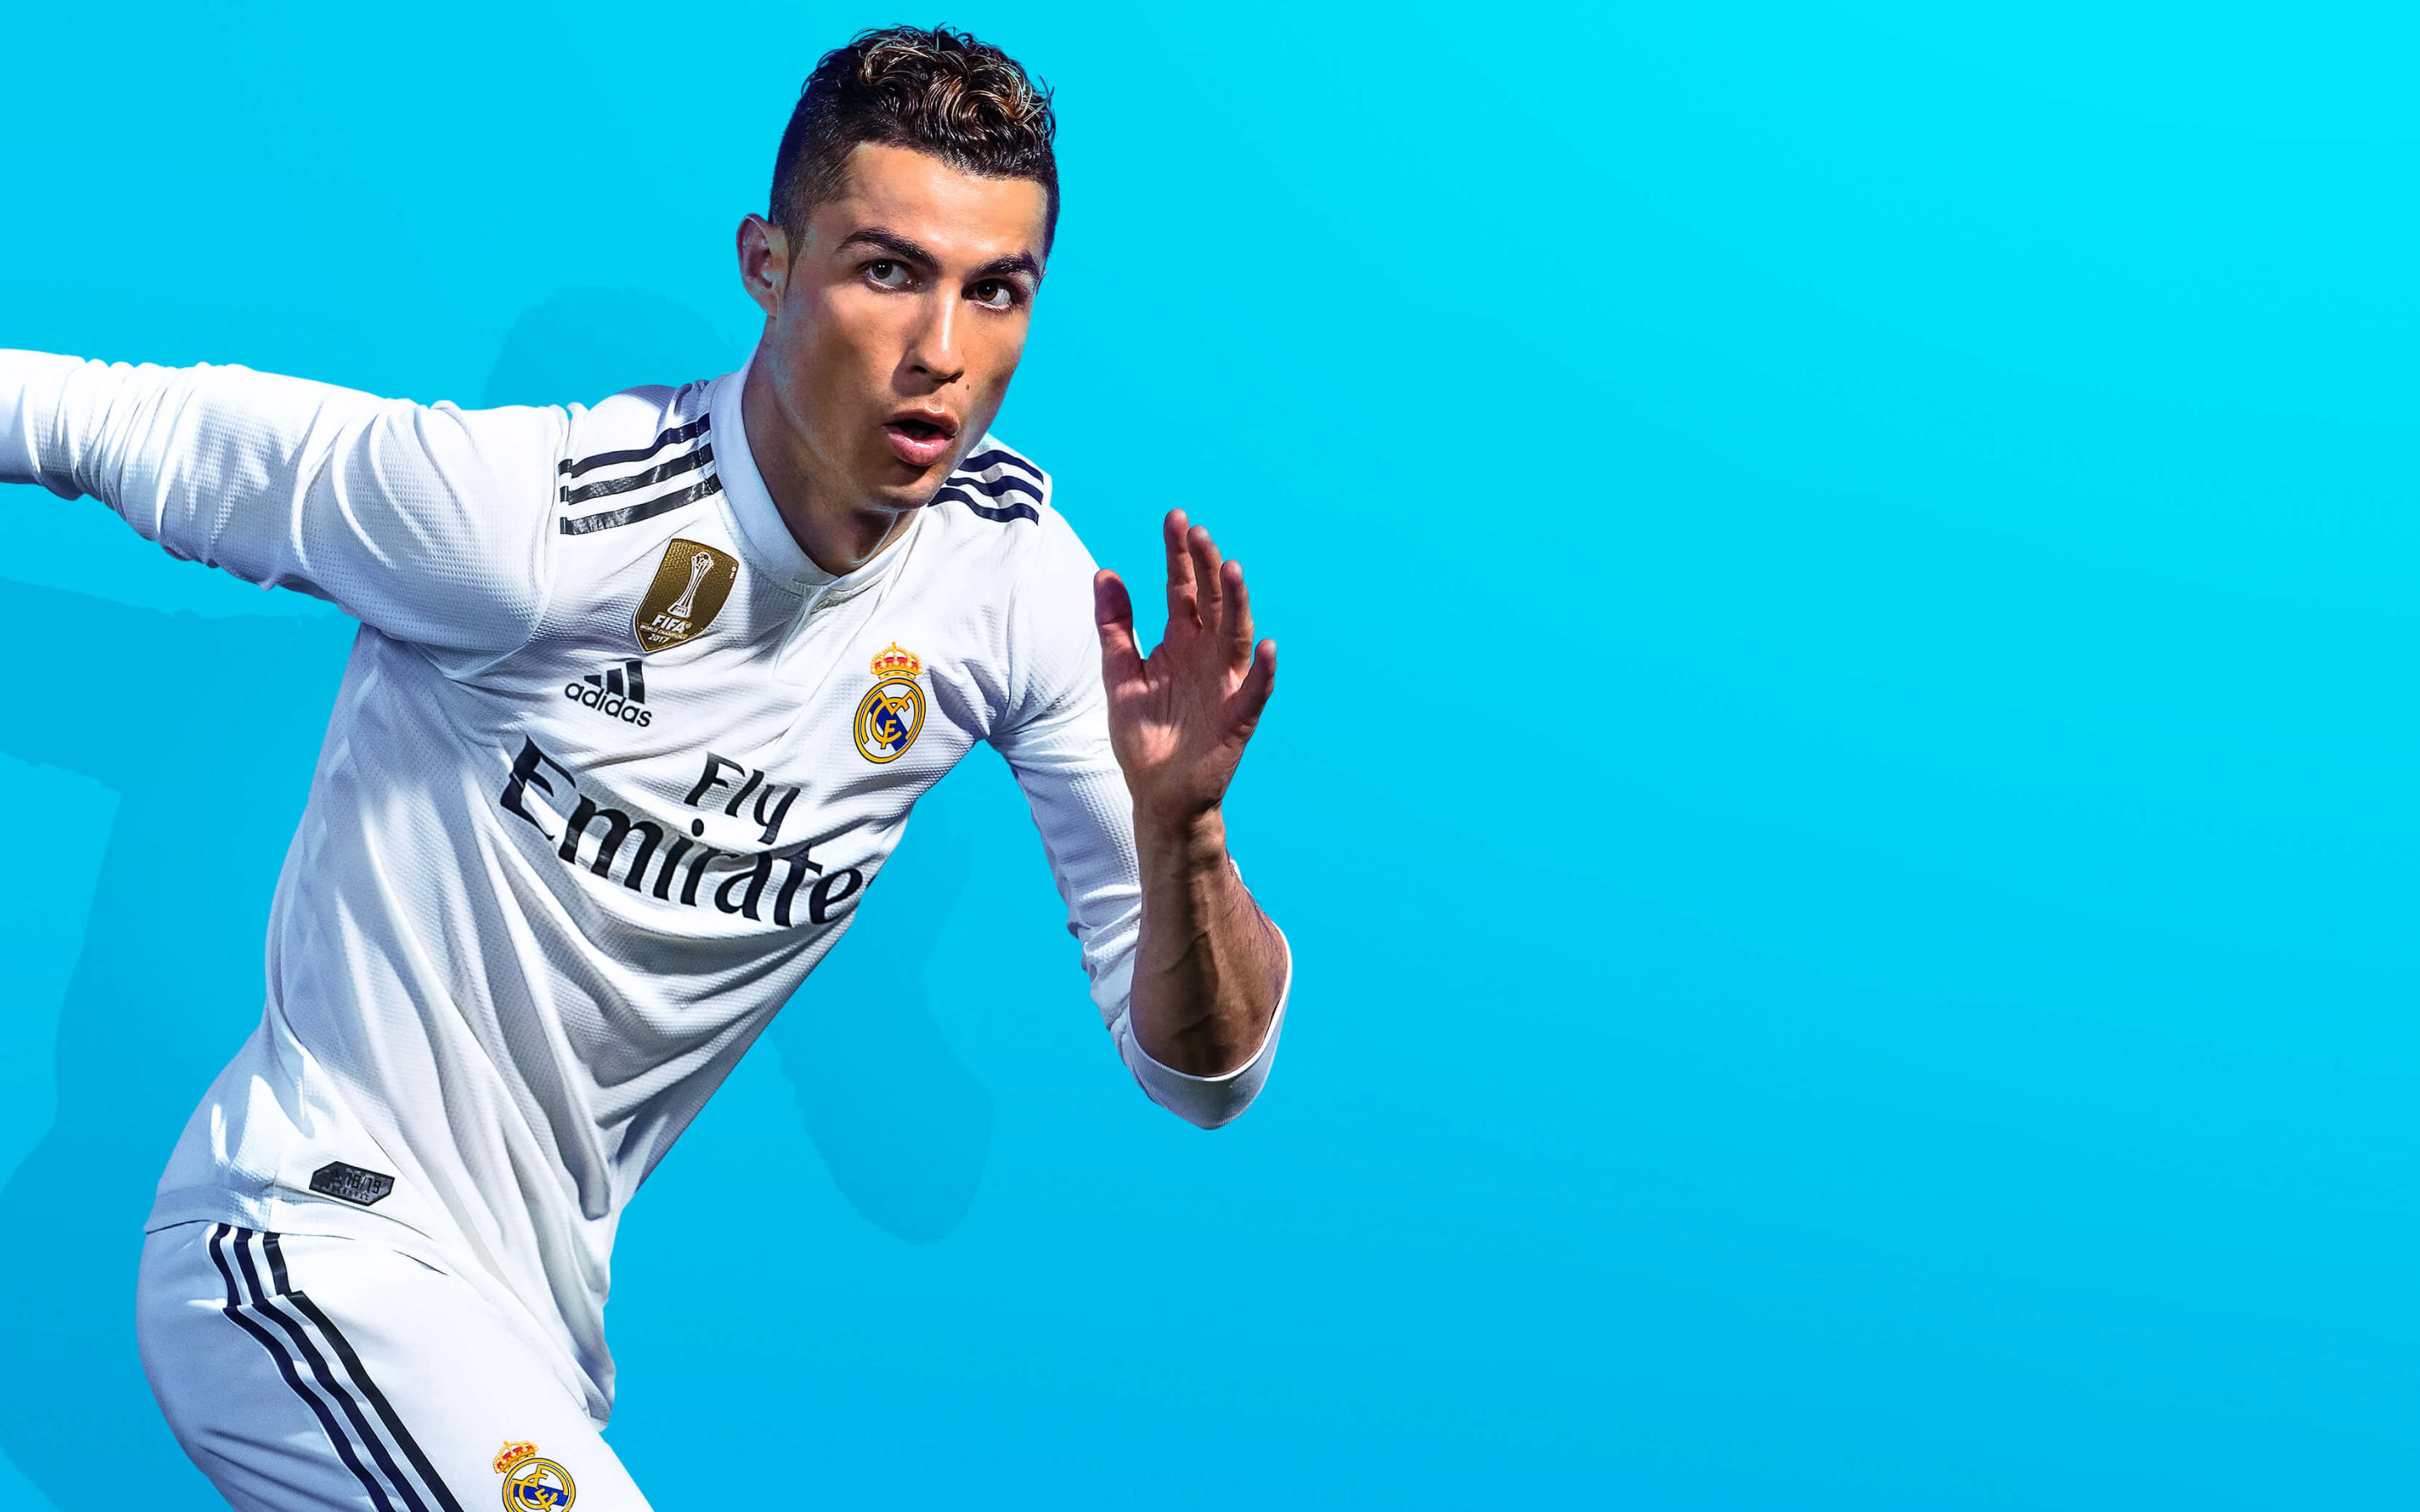 2880x1800 Resolution Fifa 19 Game Cristiano Ronaldo Macbook Pro Retina